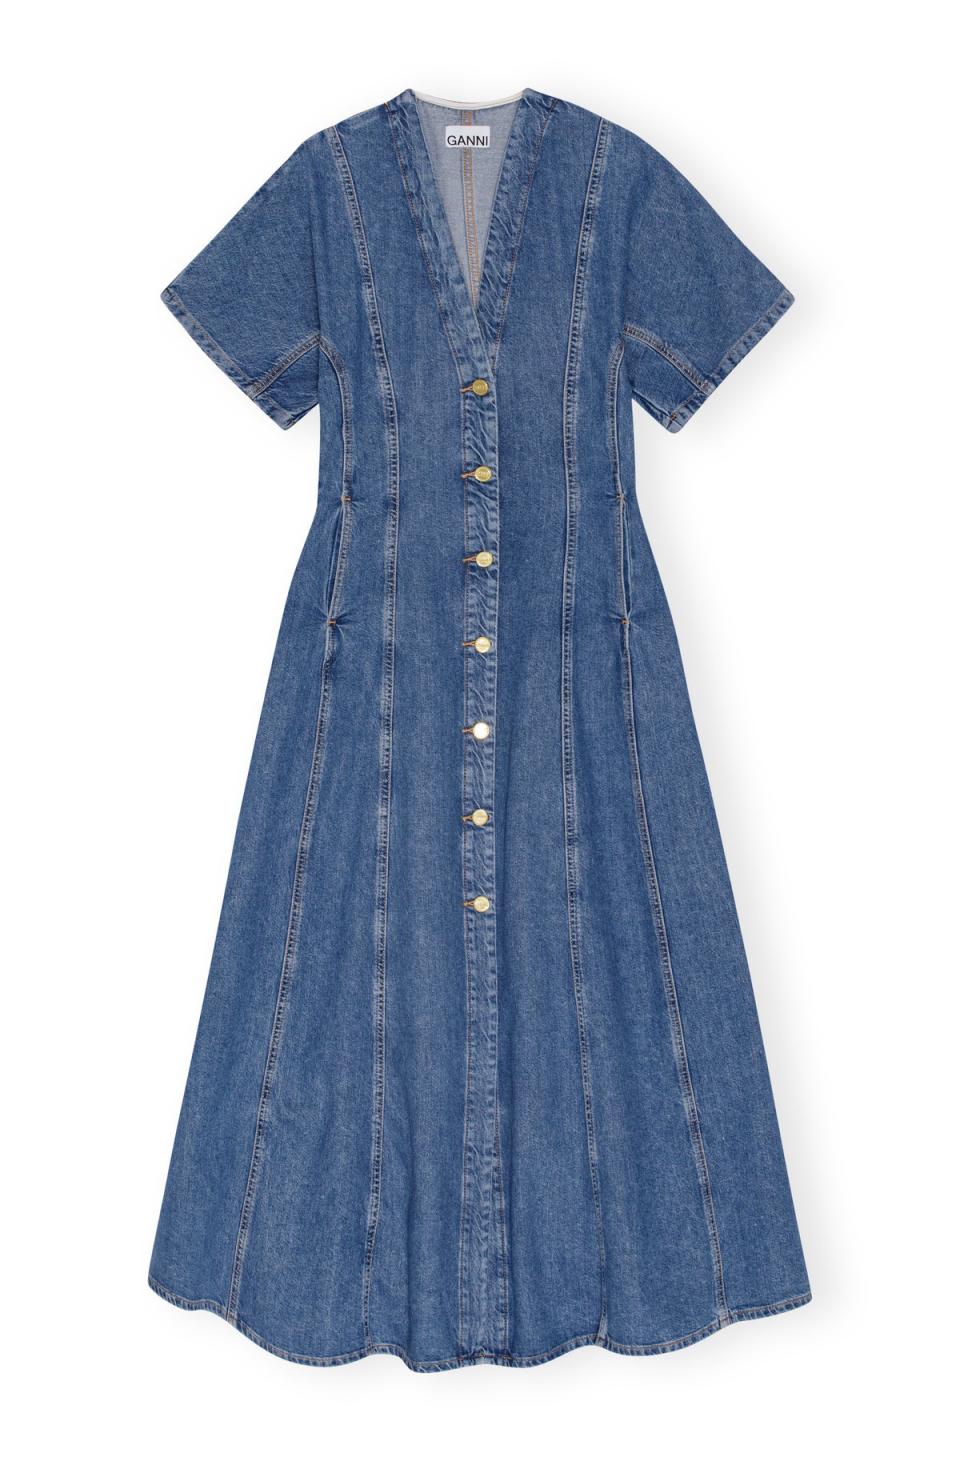 Ganni maxi dress, £325 (Ganni)